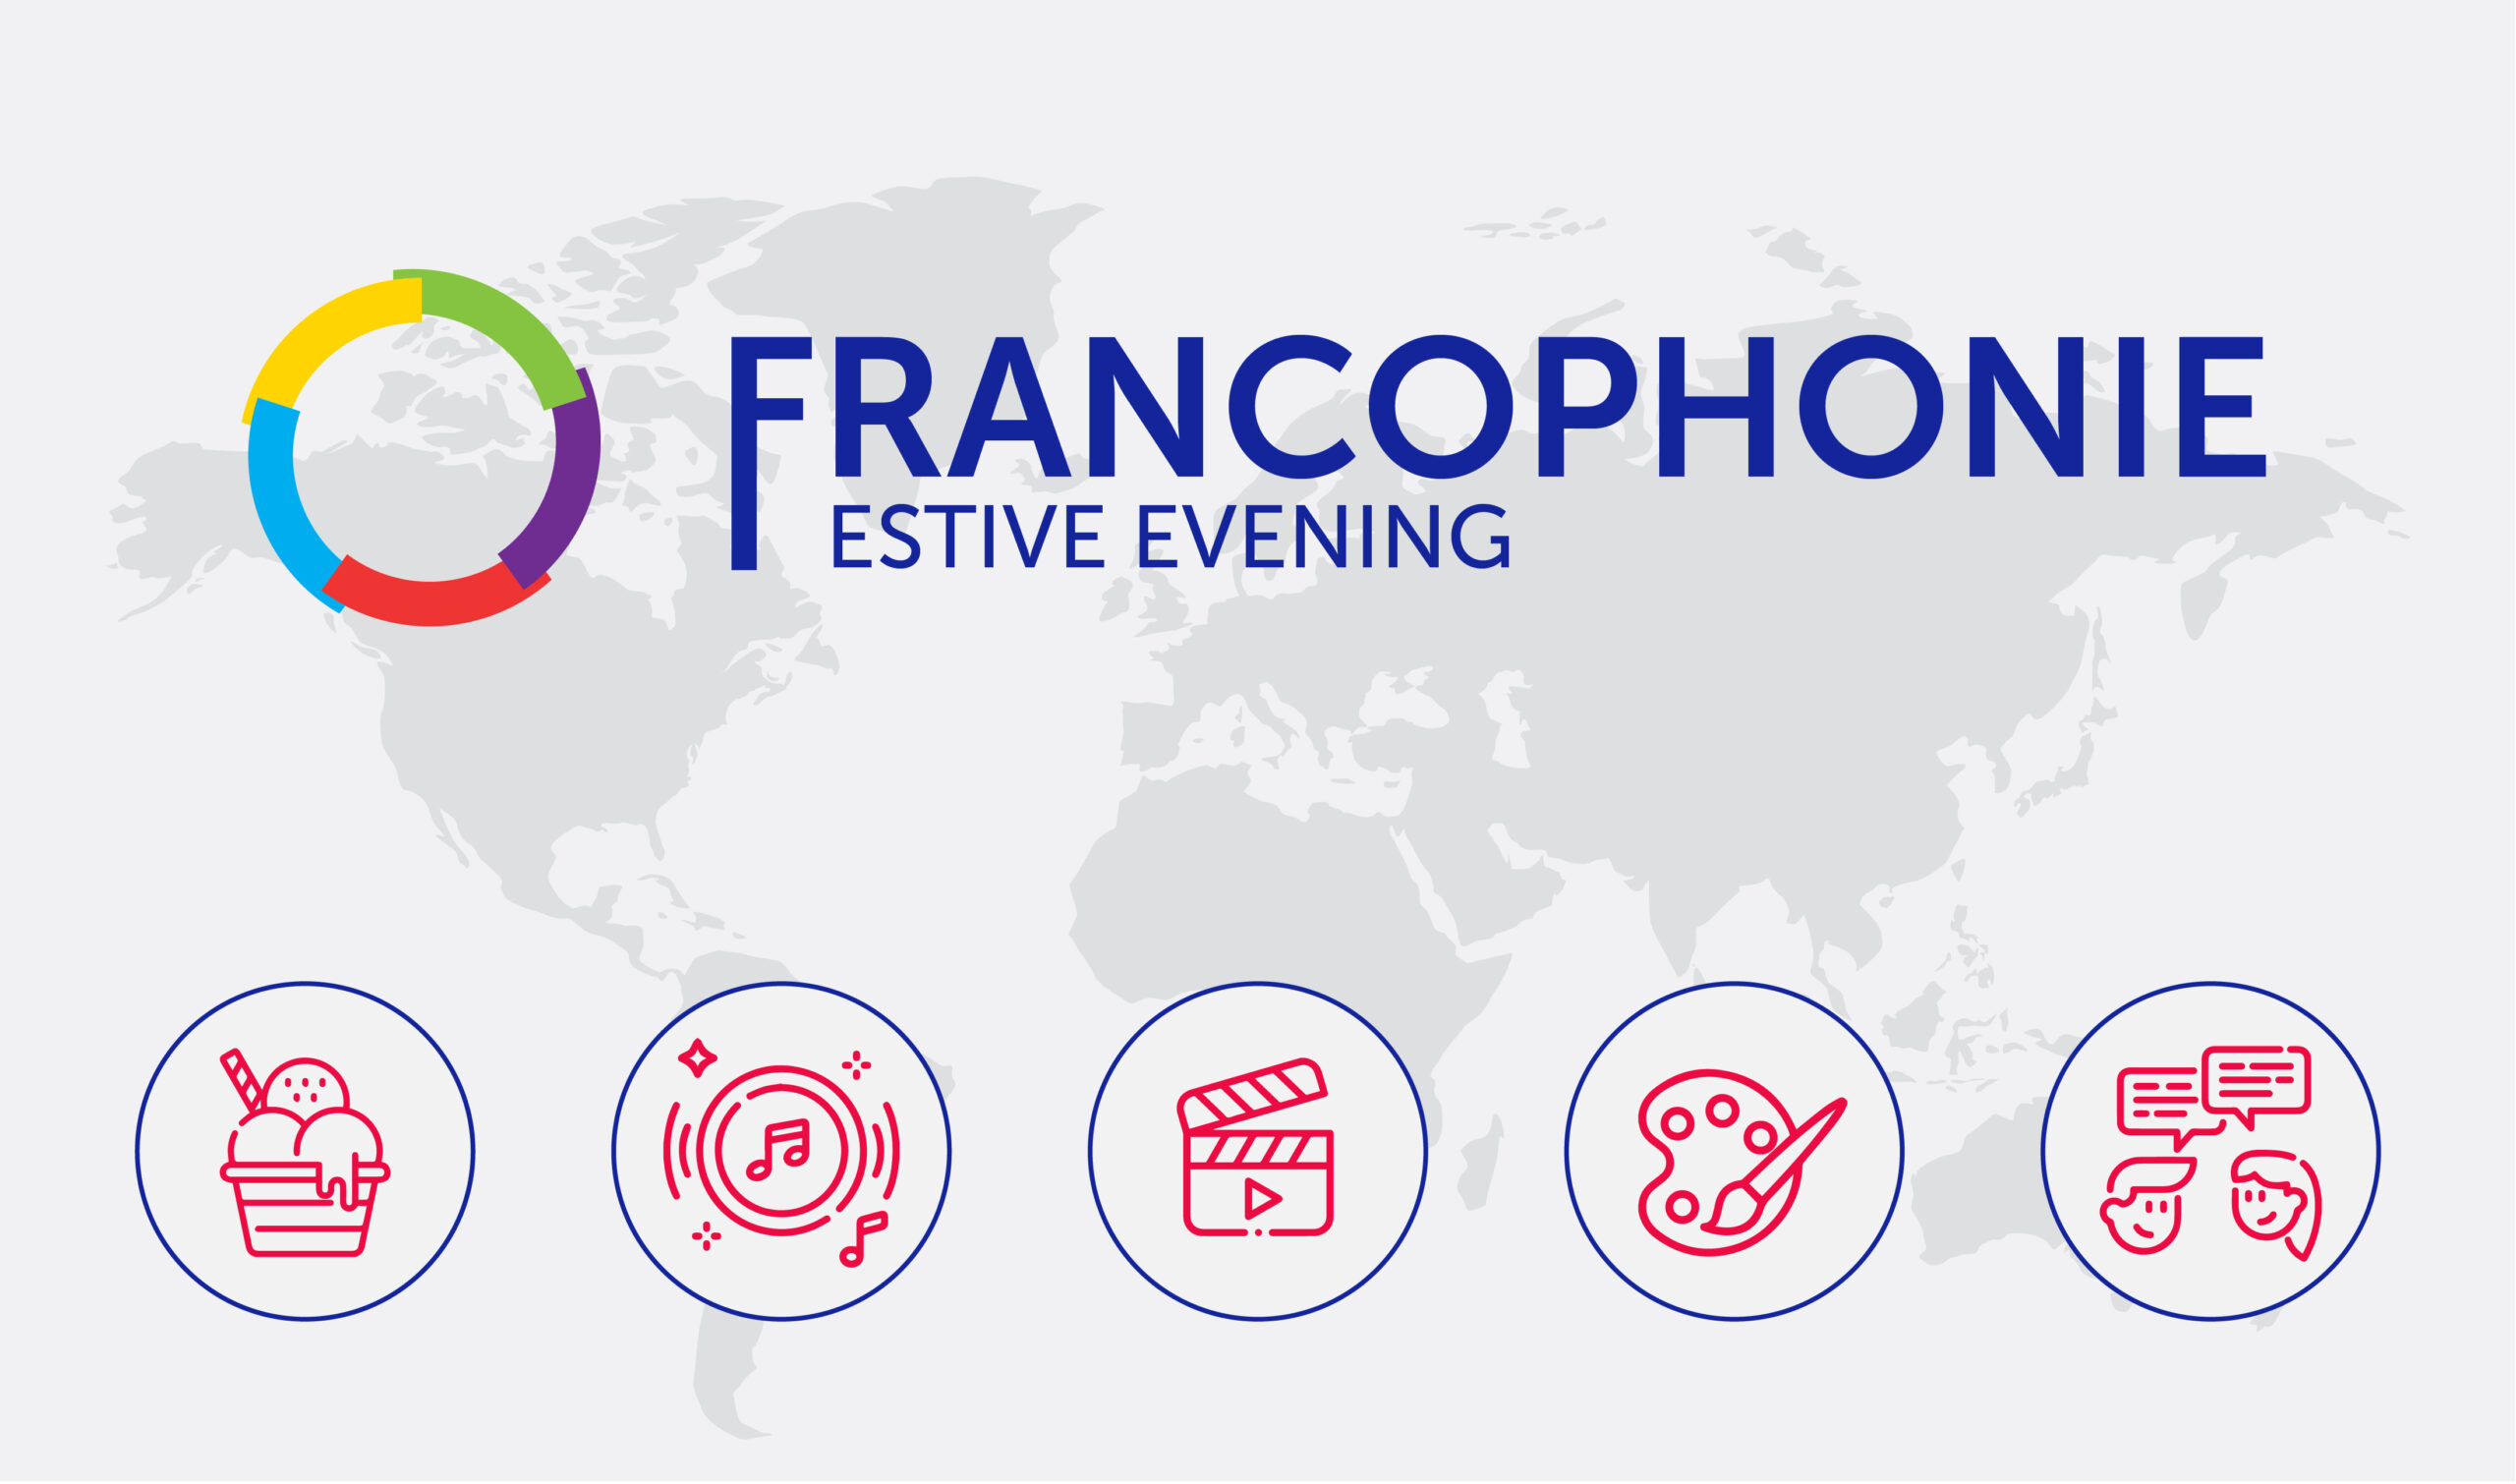 Francophonie festive evening